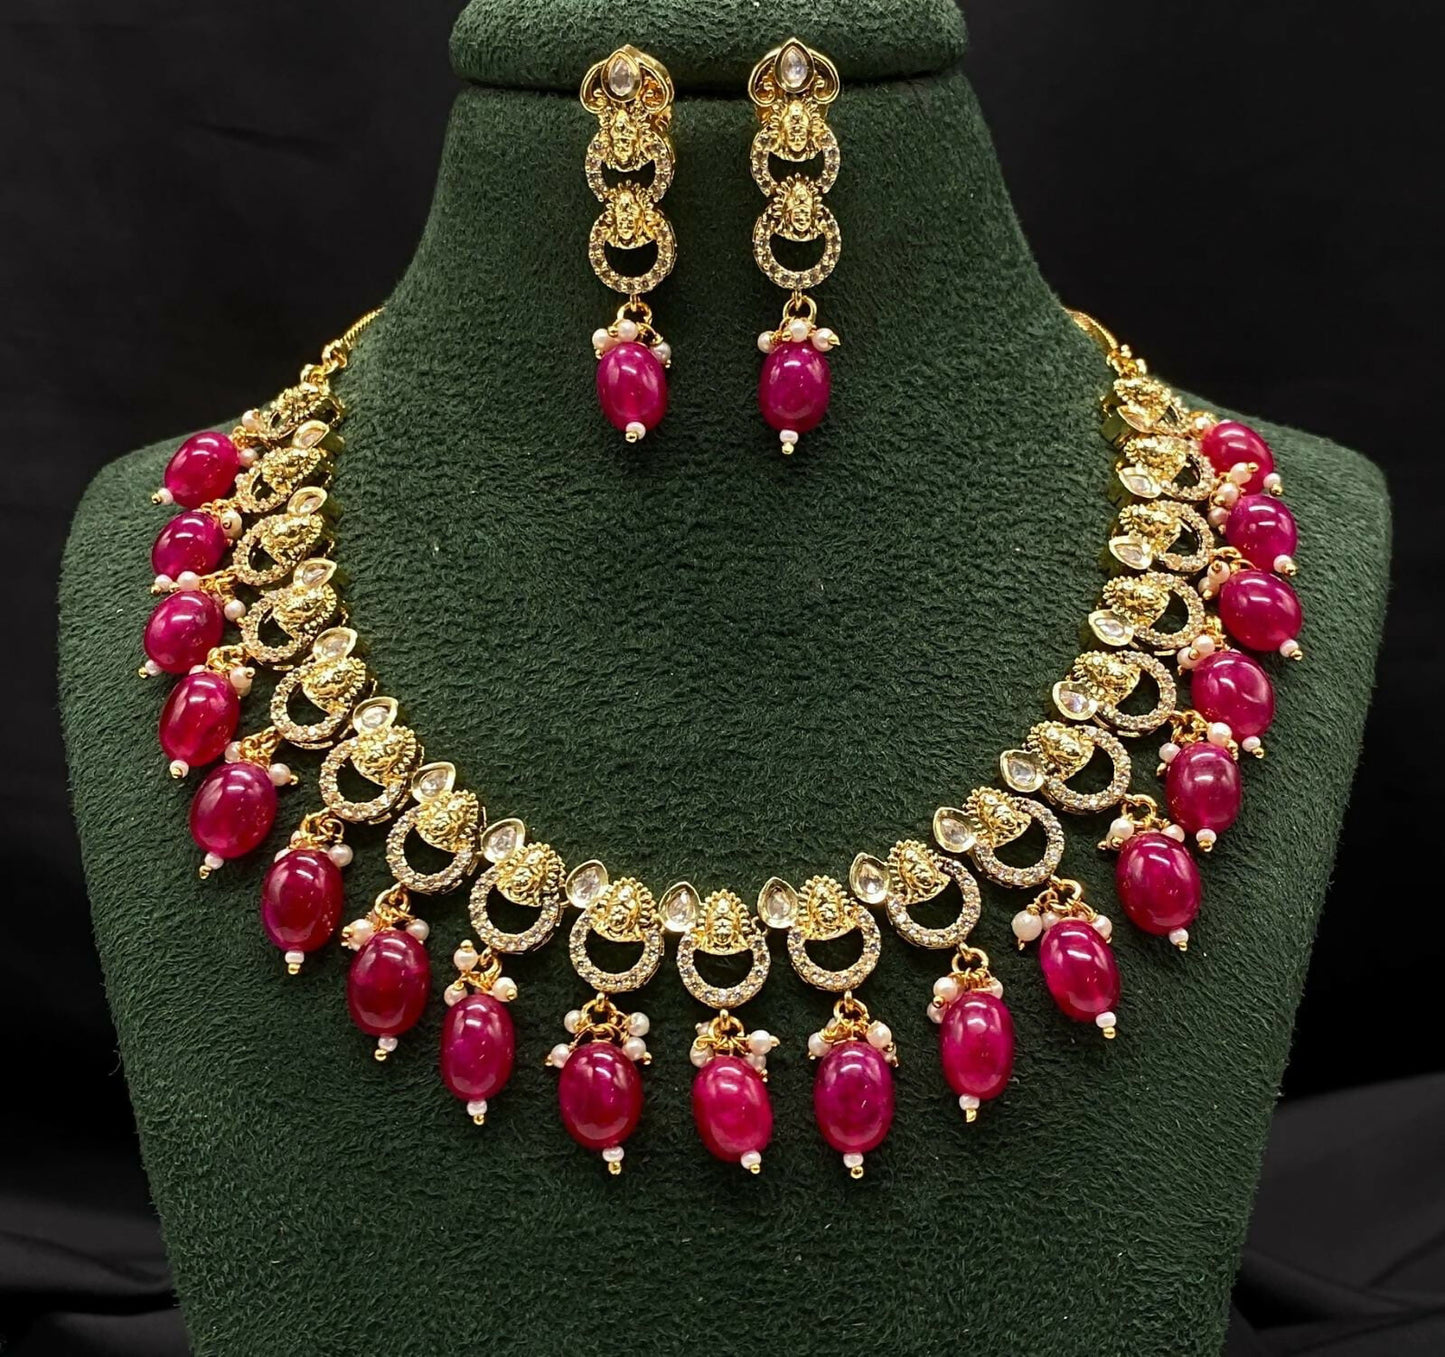 Golden beads necklace set